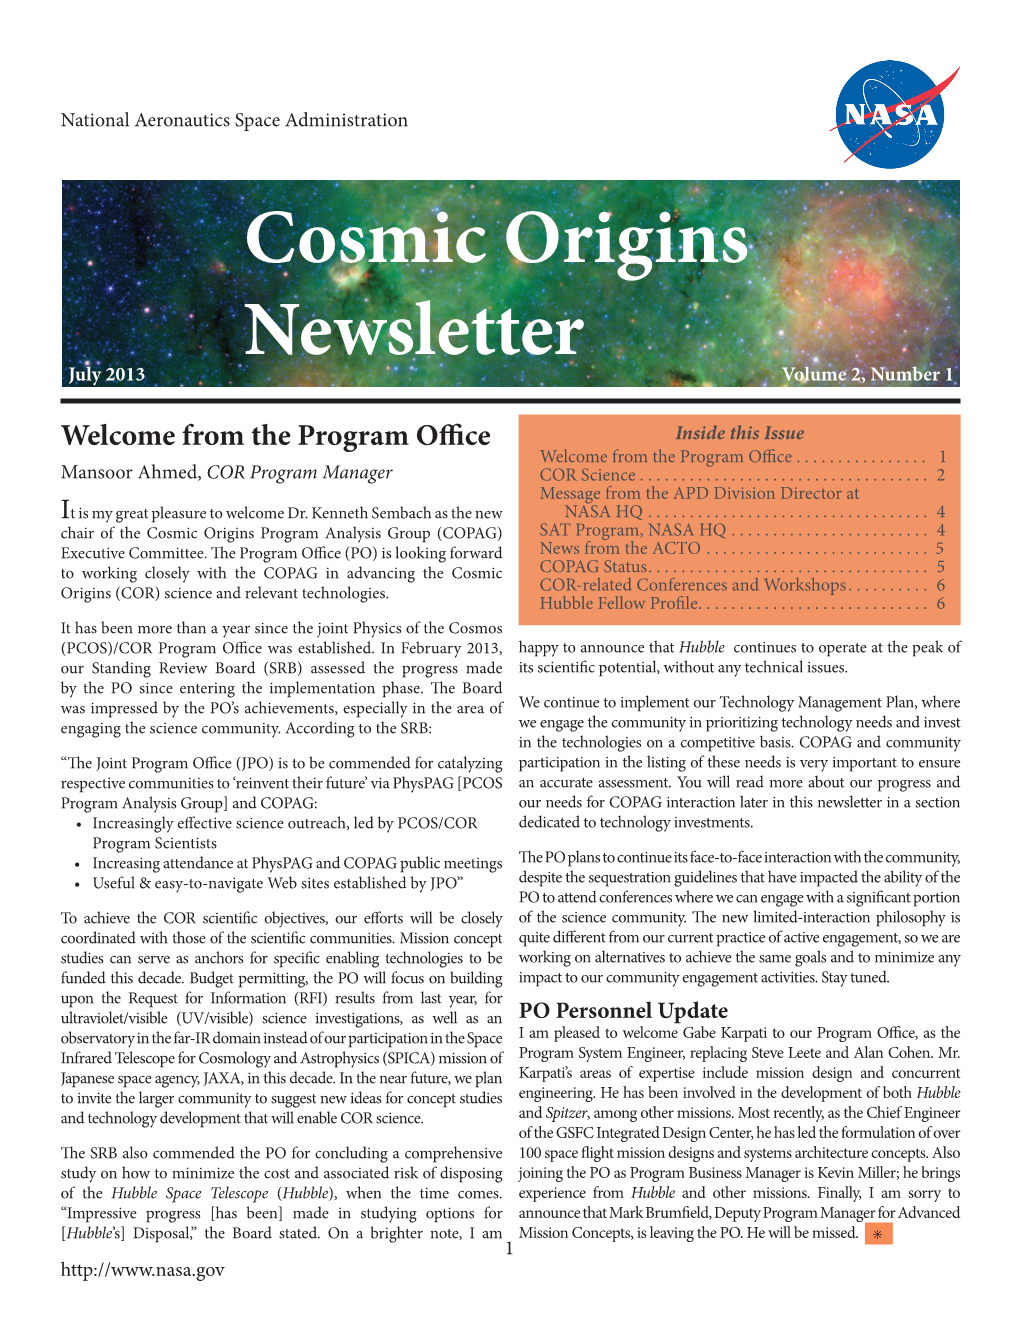 Cosmic Origins Newsletter July 2013 Volume 2, Number 1